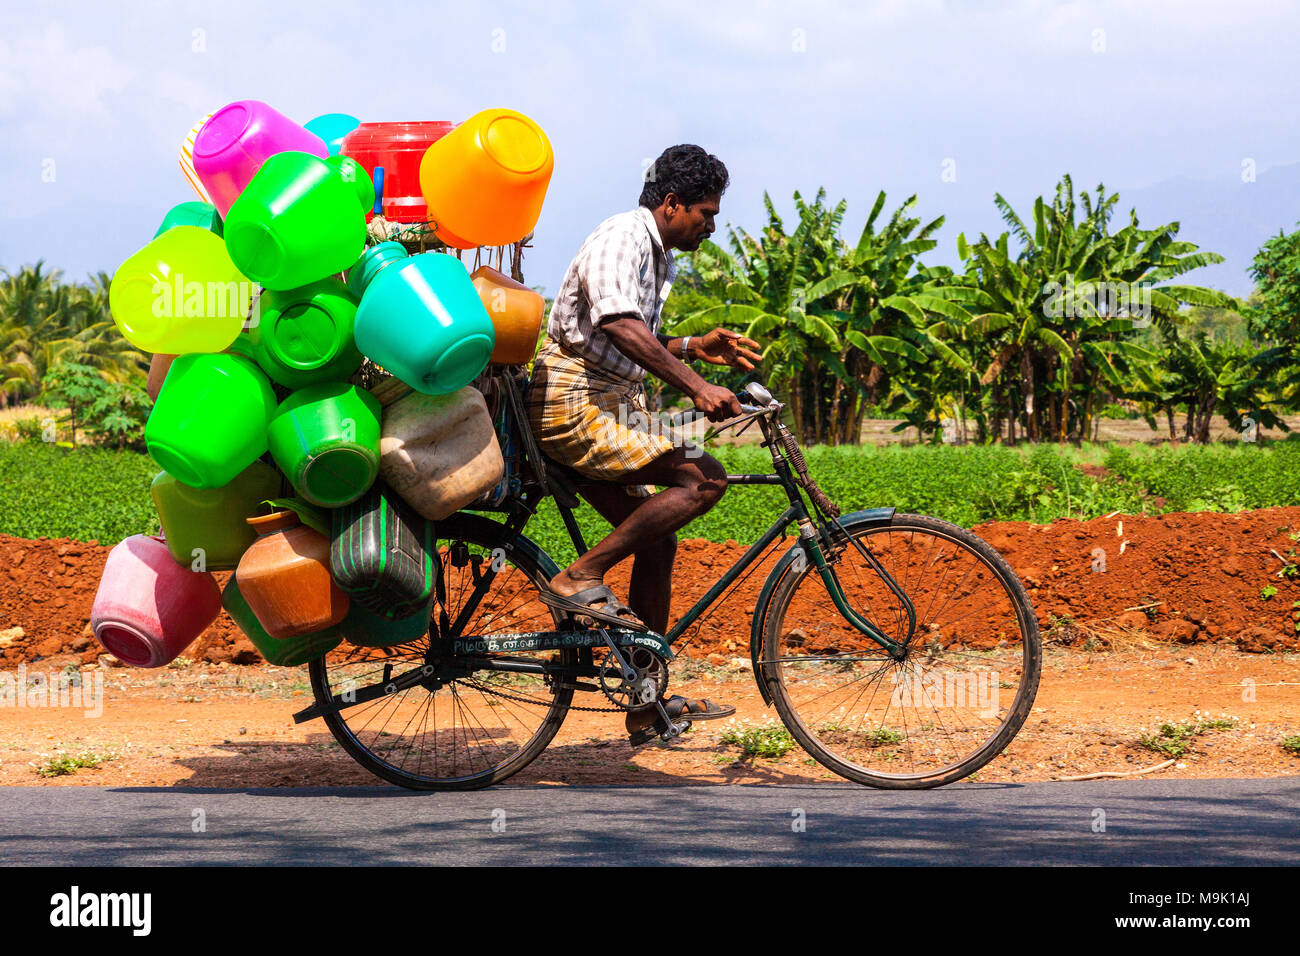 Salesman on bicycle, selling plastic buckets - Tamil Nadu, India. Stock Photo